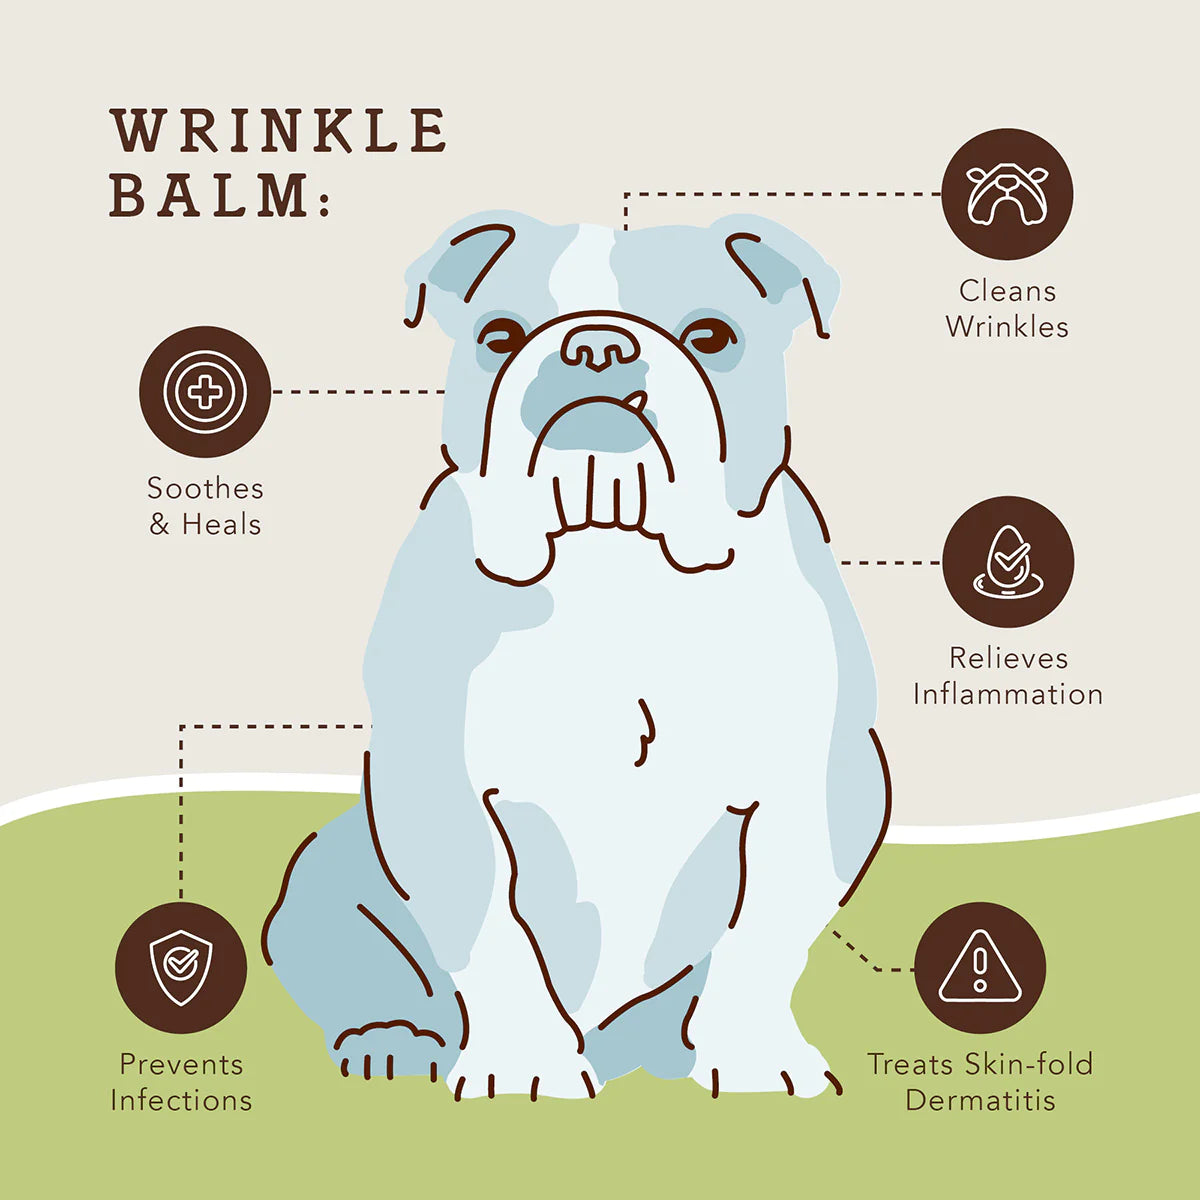 "Organic Wrinkle Balm